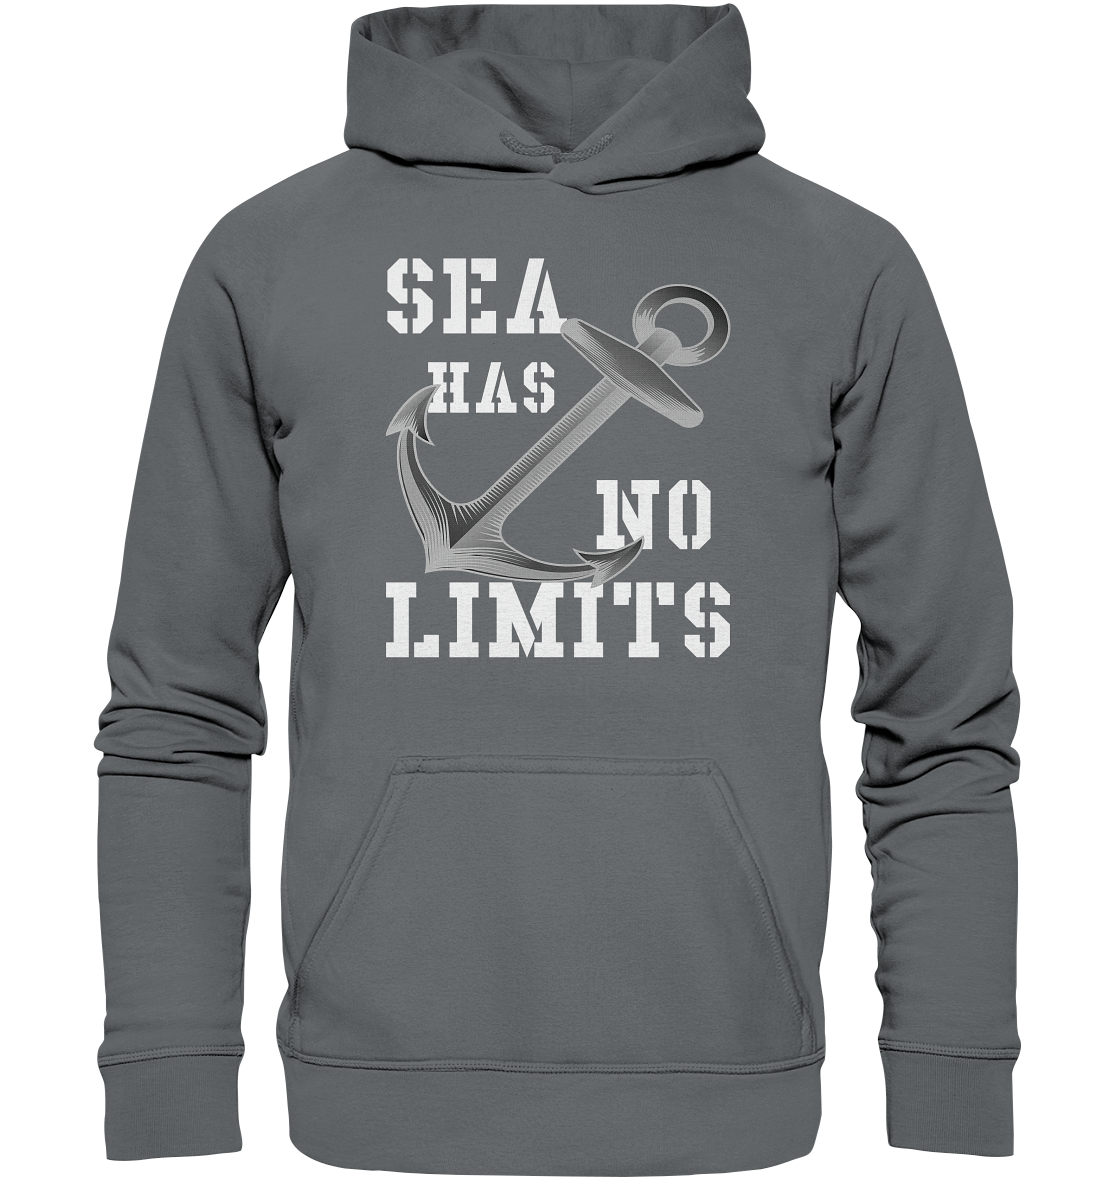 Sea has no limits - Basic Unisex Hoodie